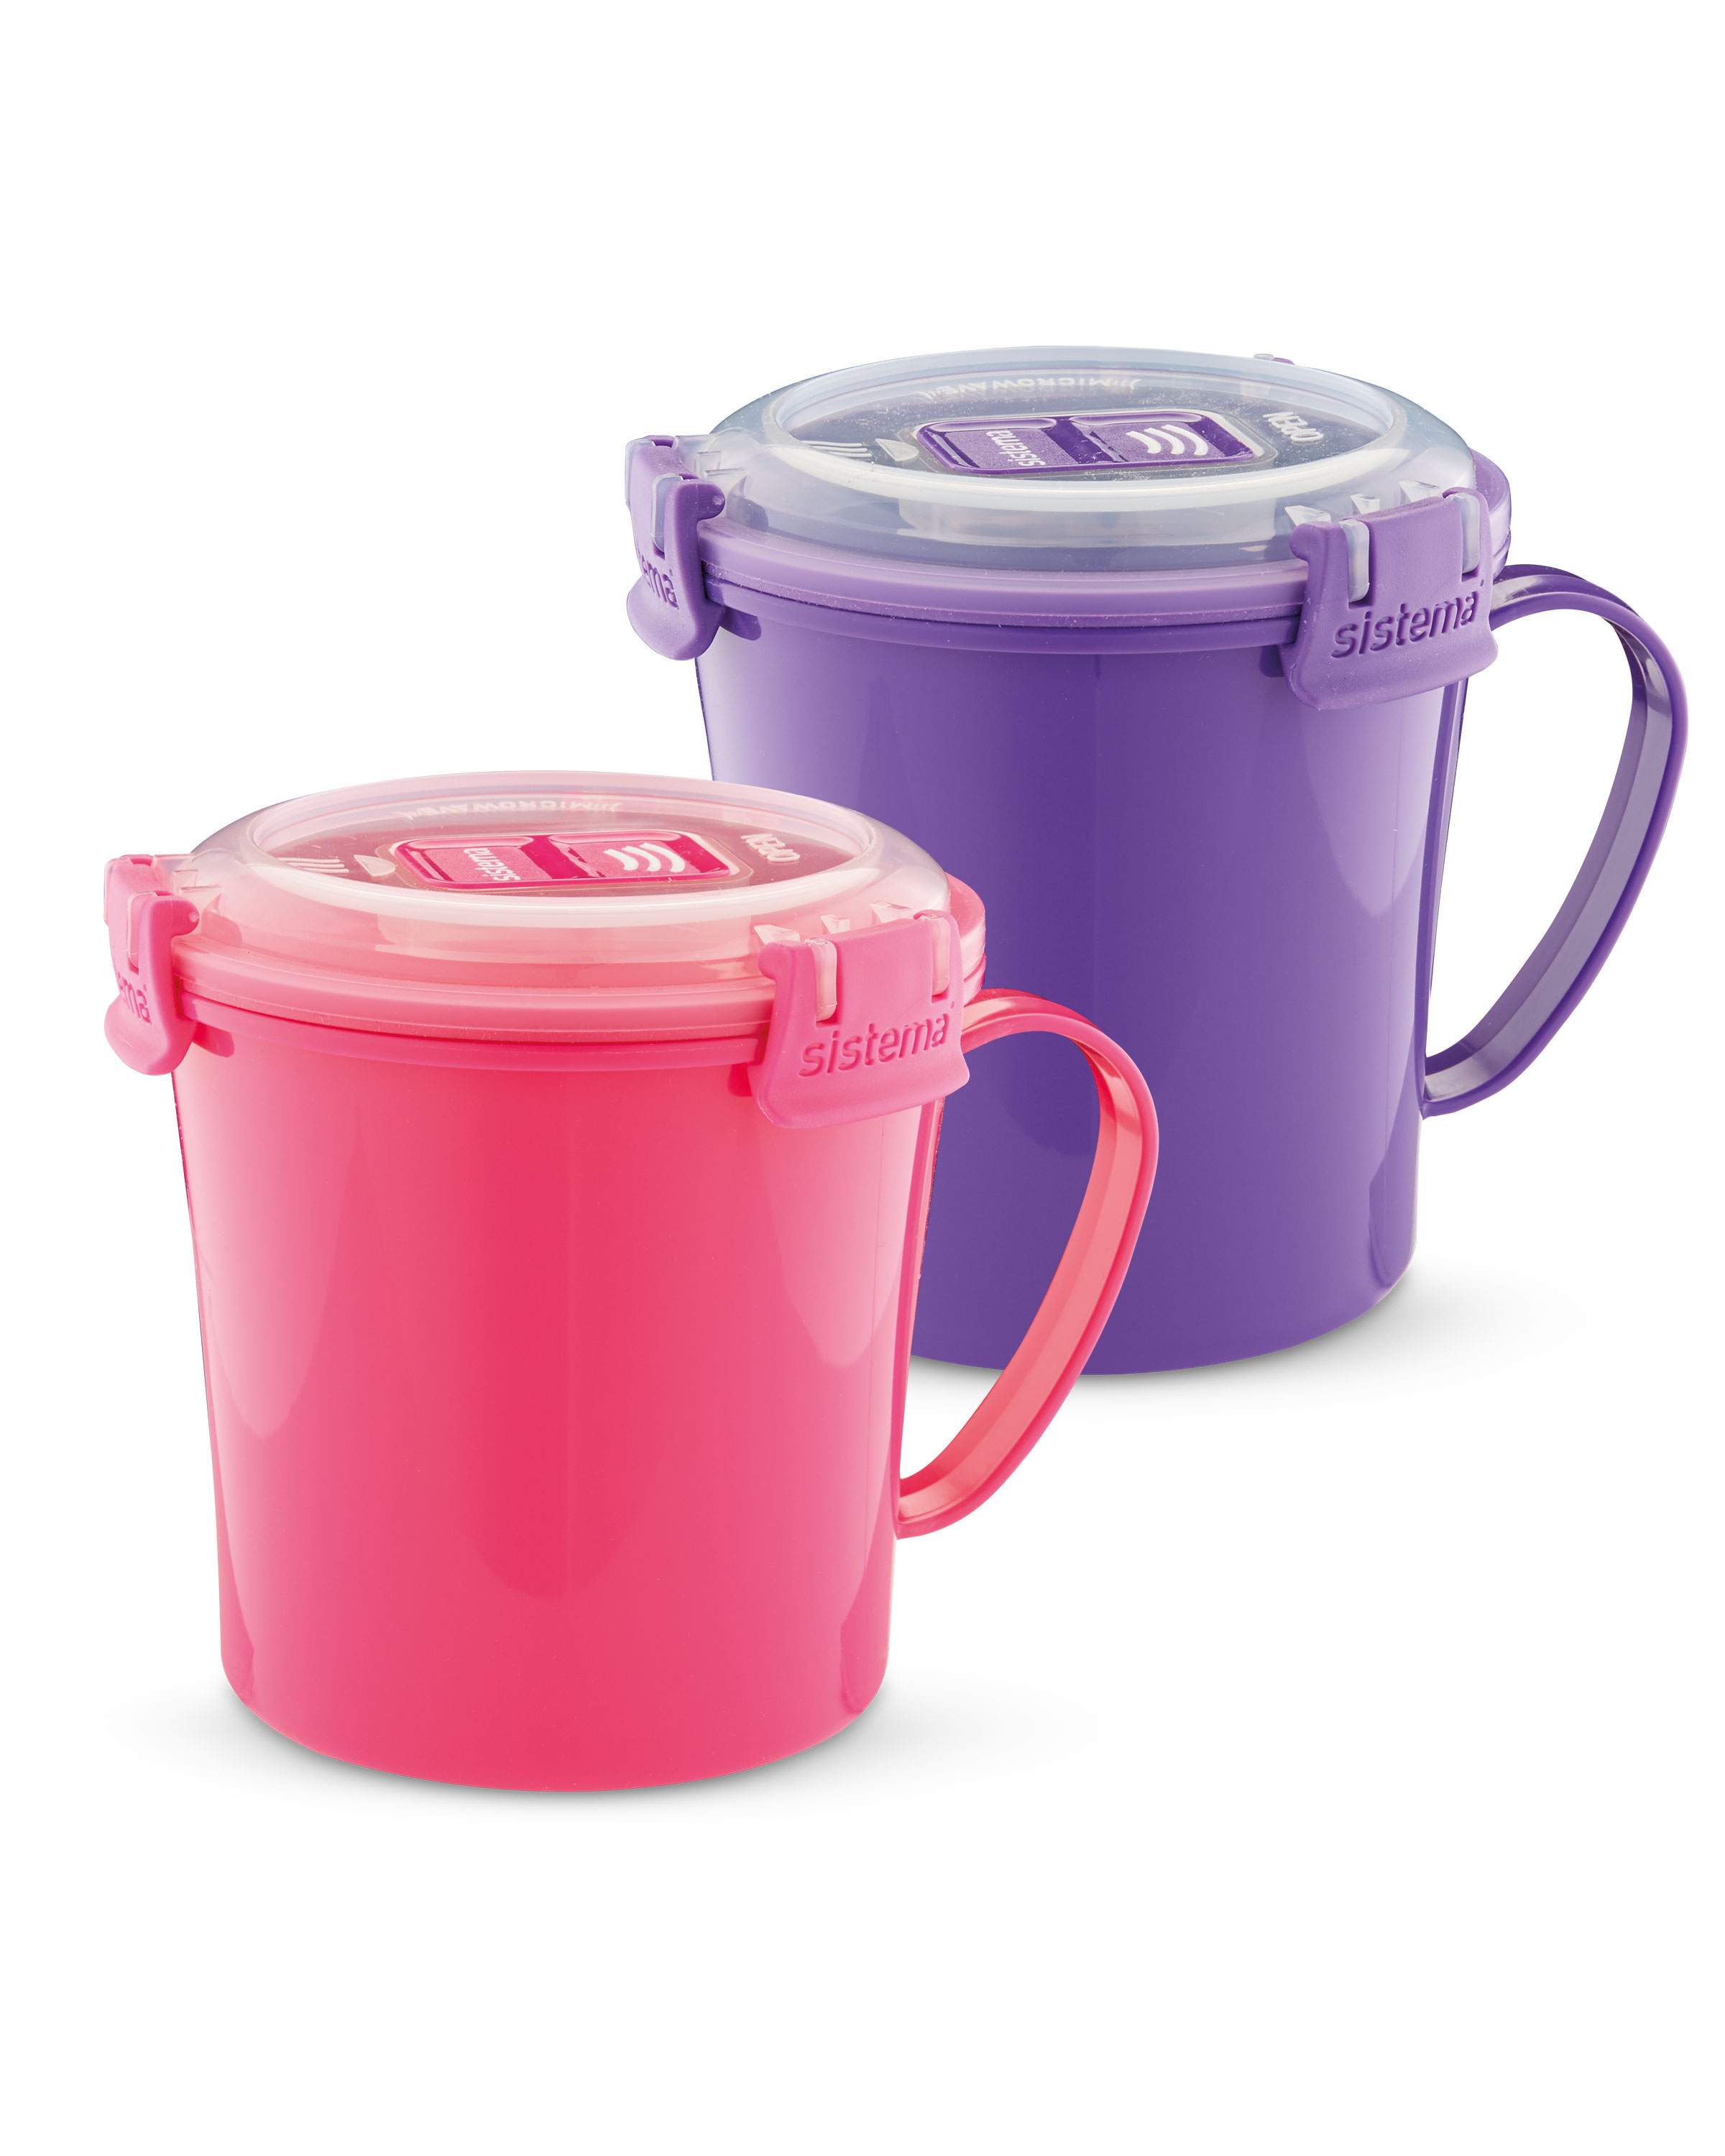 Sistema Snack buckets - 2-Pack - Portion pod - 210 mL - Turquoise/Purple